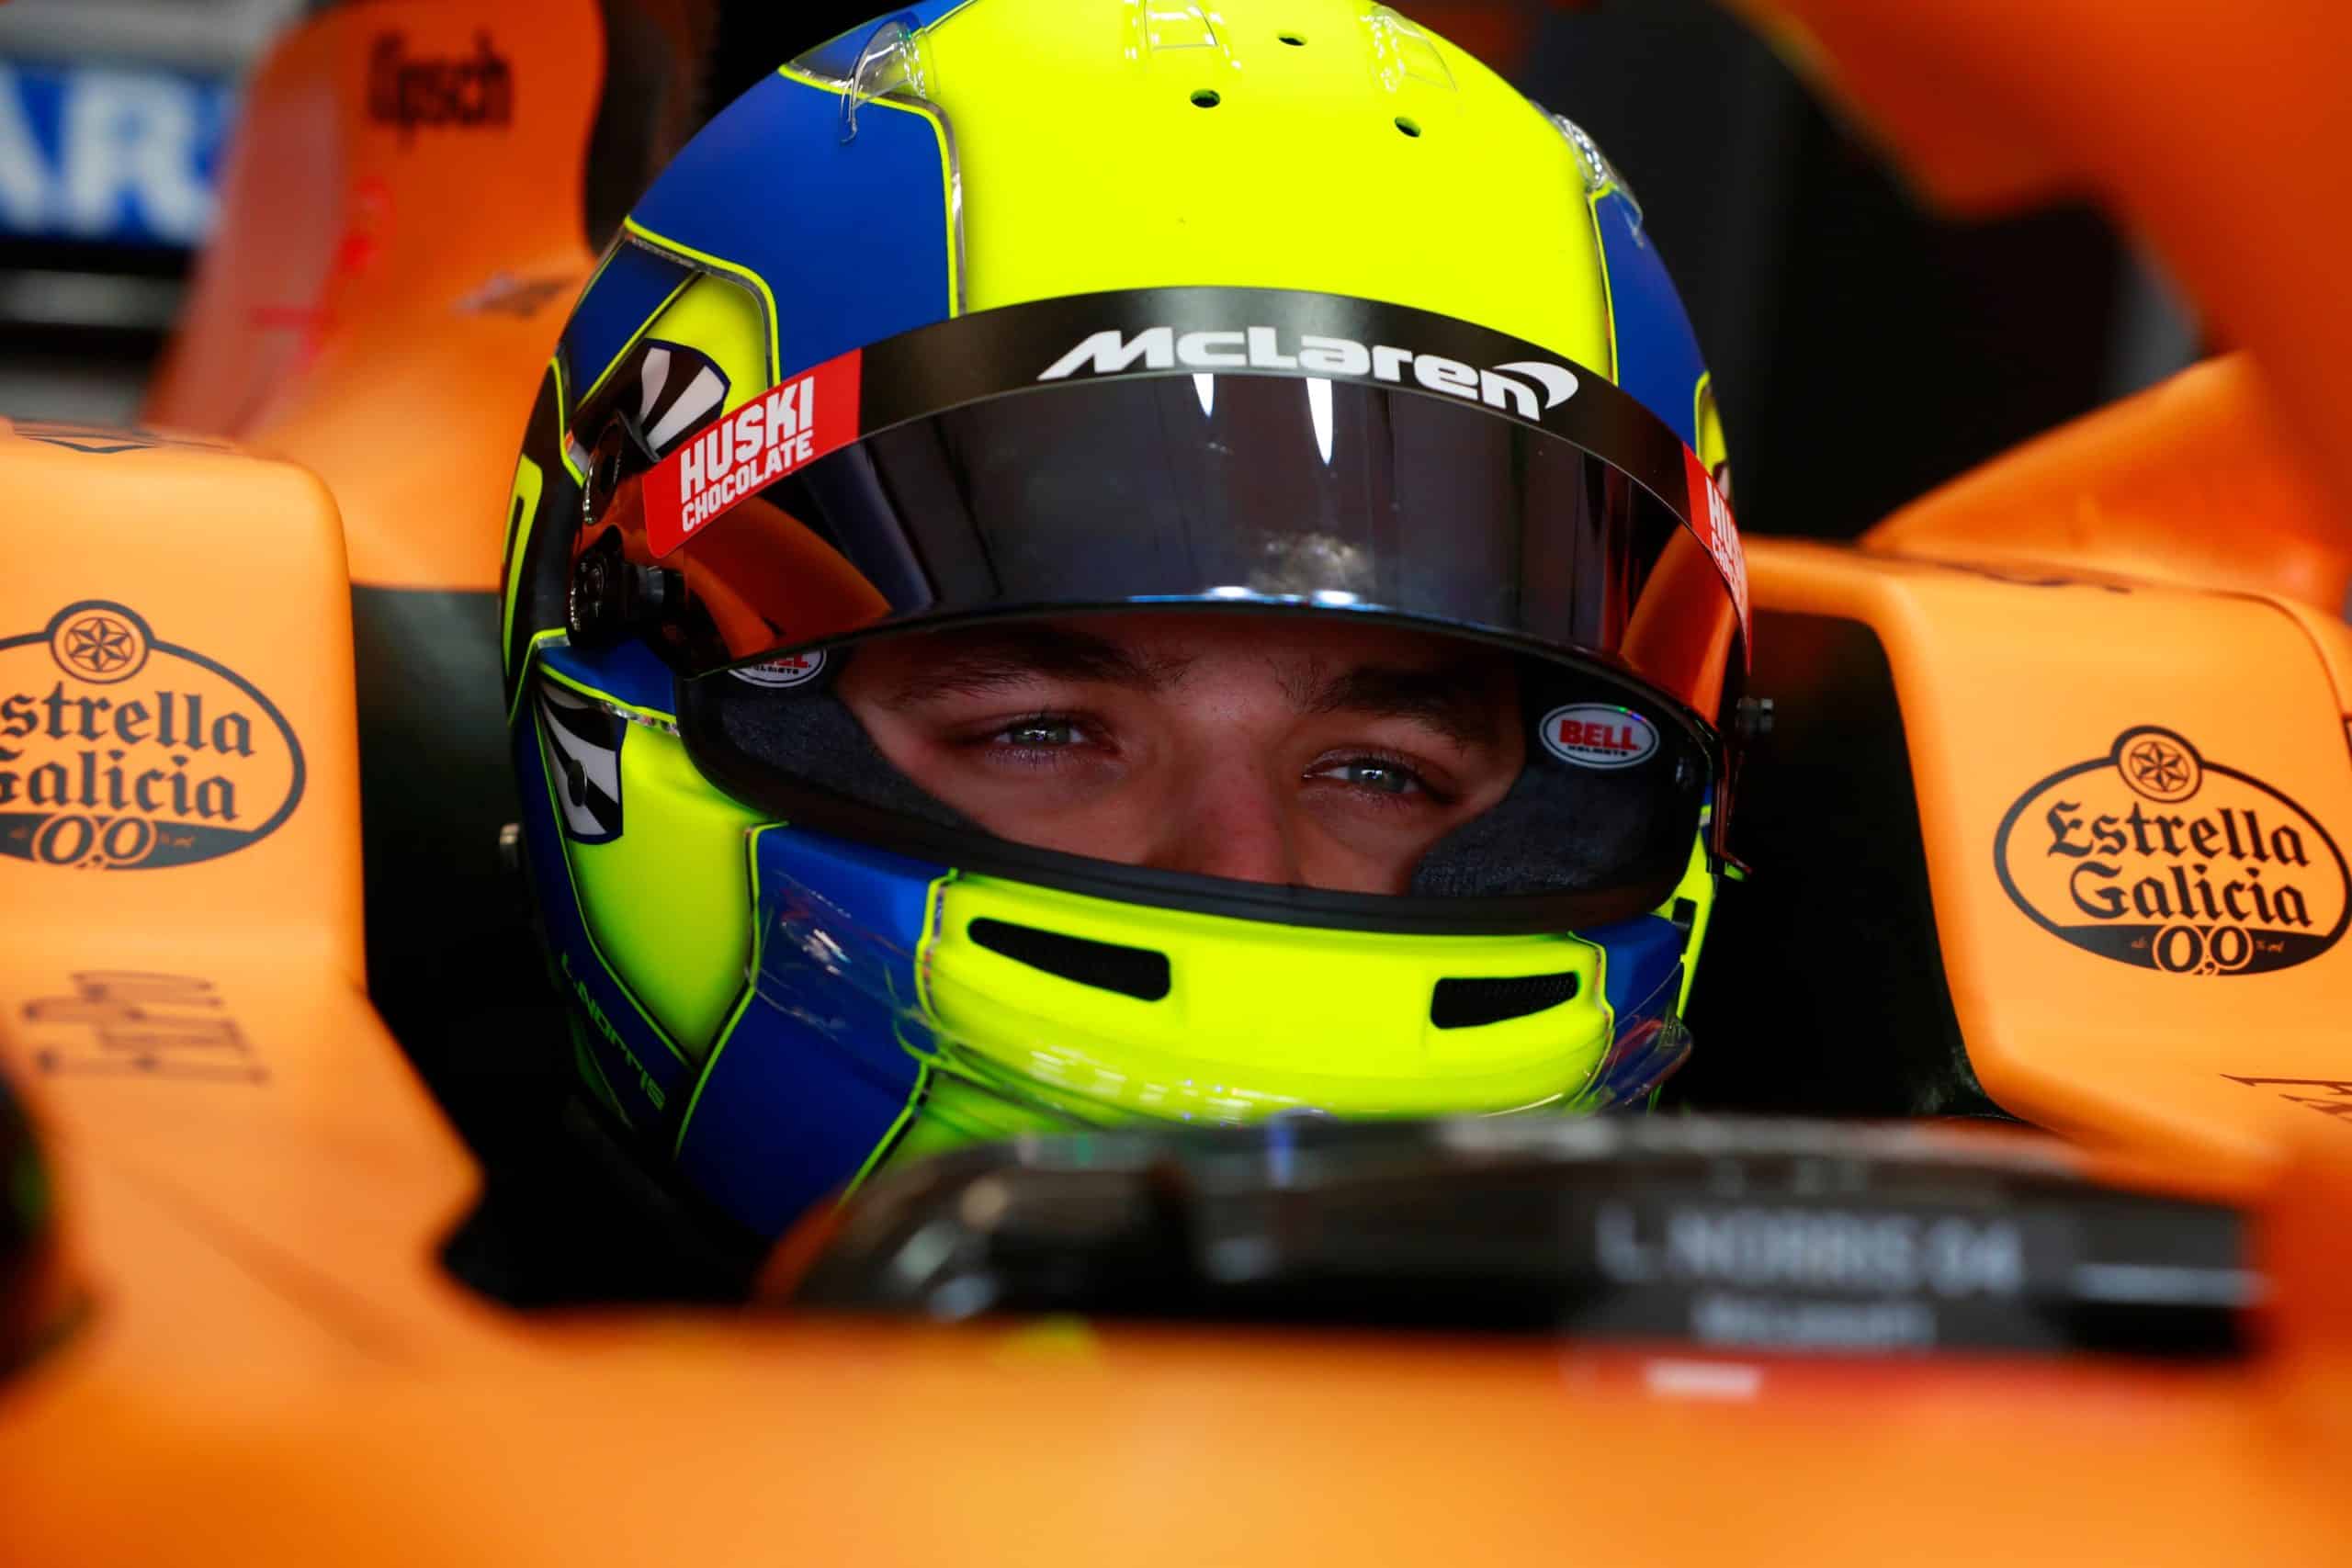 Ricciardo heads to mclaren, pictured in his Renault gear in 2019